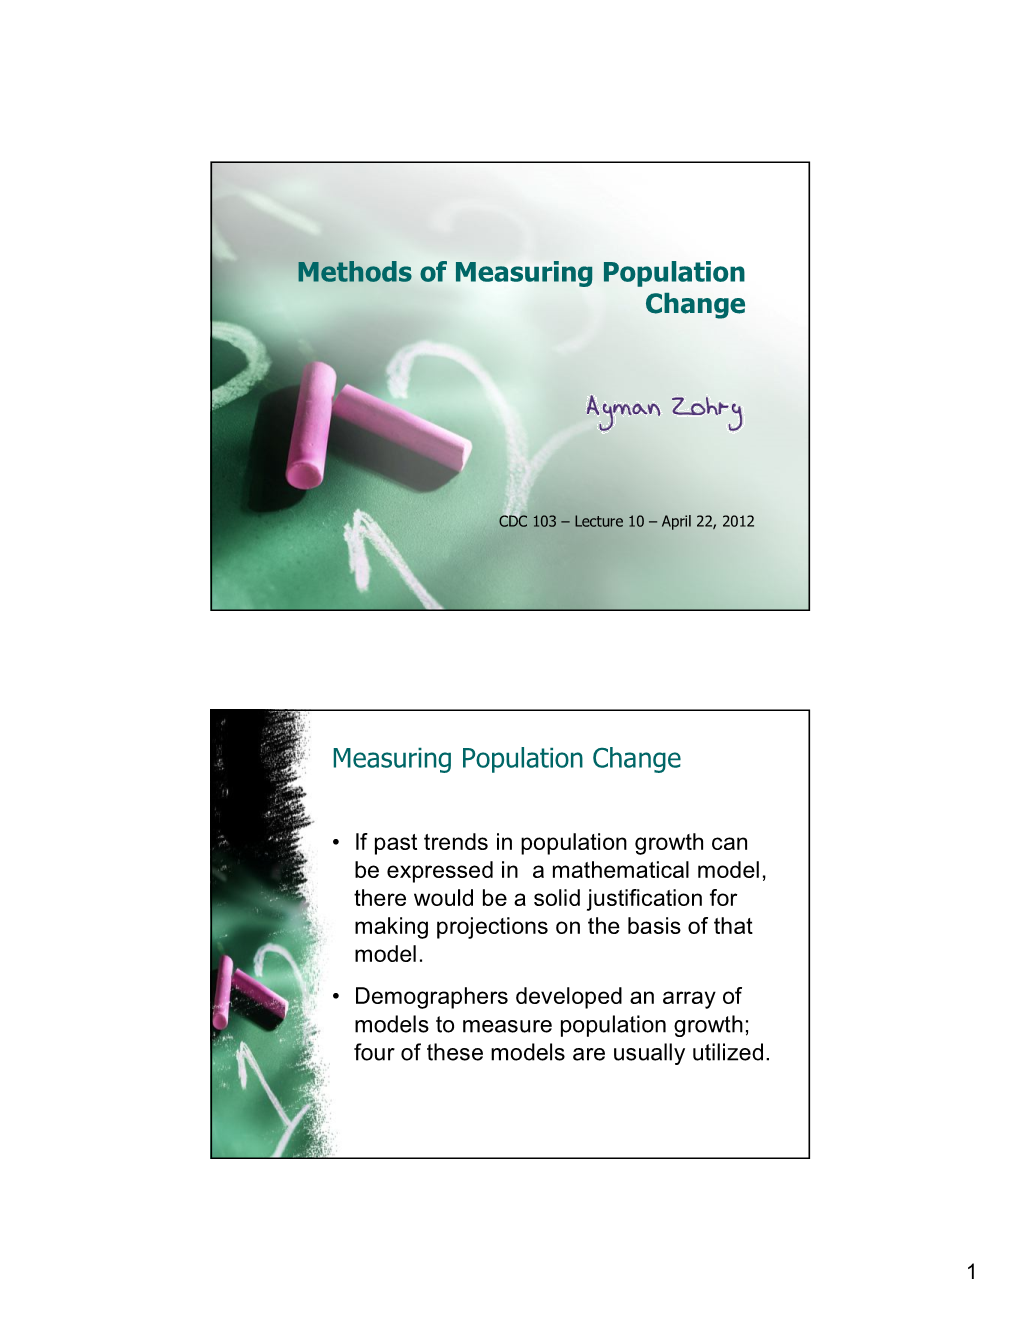 Methods of Measuring Population Change